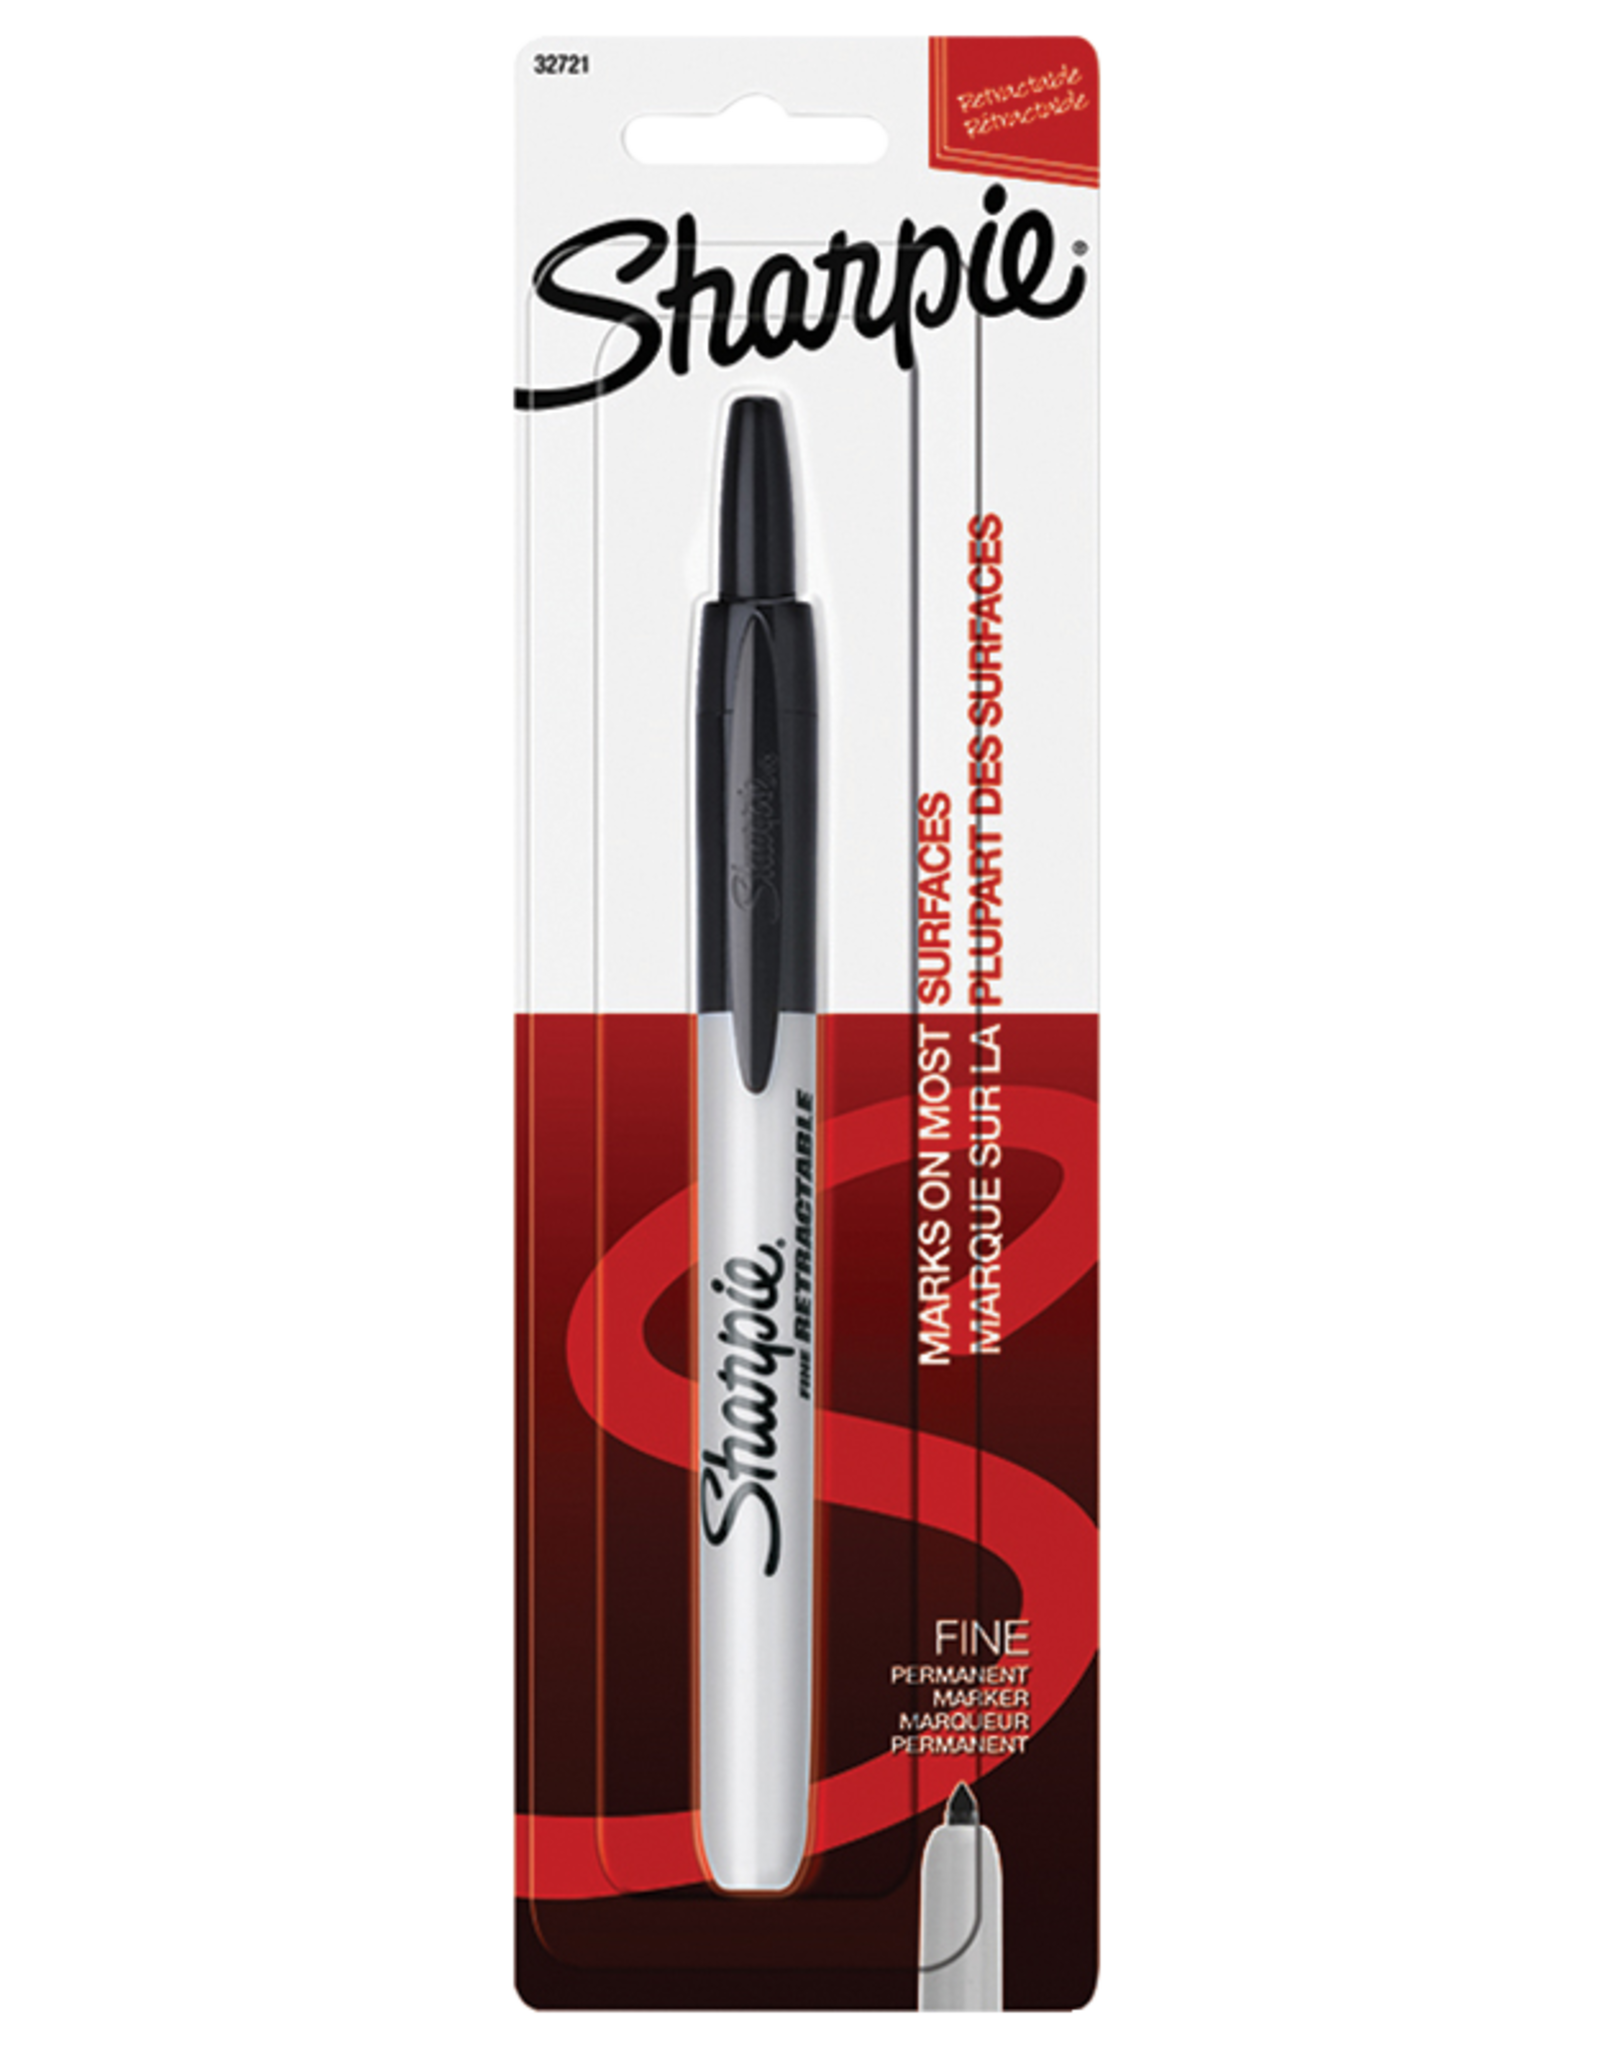 Sharpie Sharpie 32721 Retractable Permanent Marker, Fine Black Lead/Tip